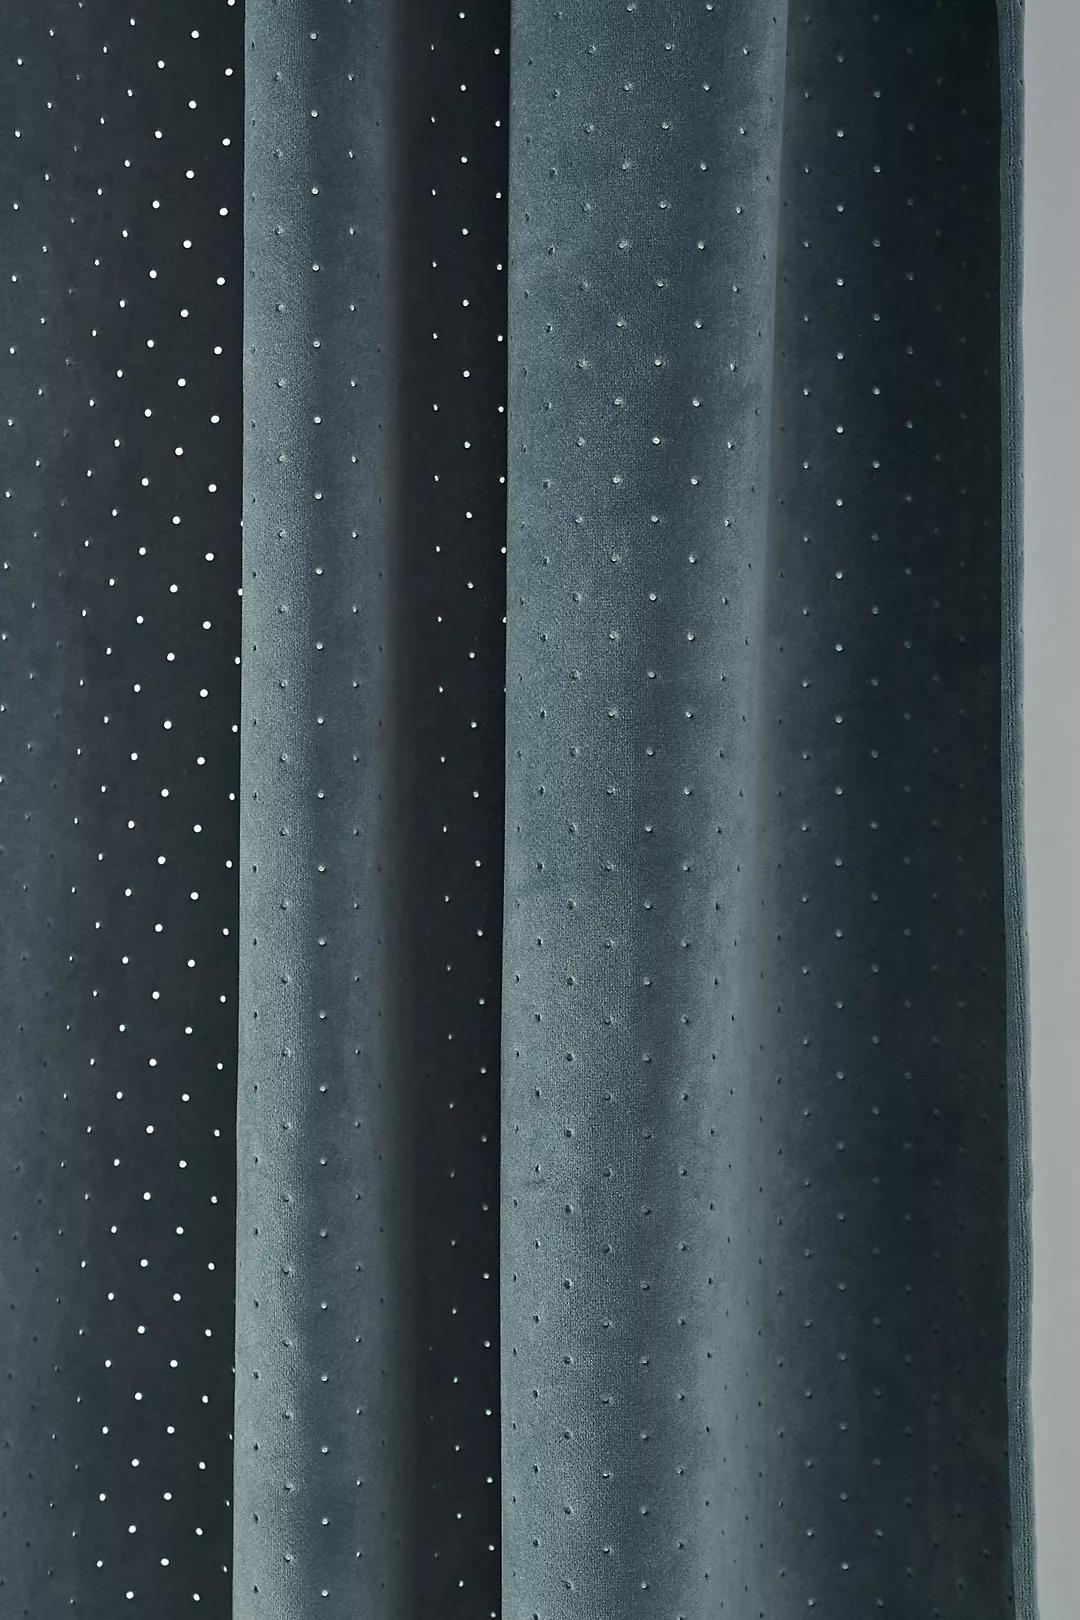 Velvet Louise Curtain, Blue, 96" X 50" - Image 2